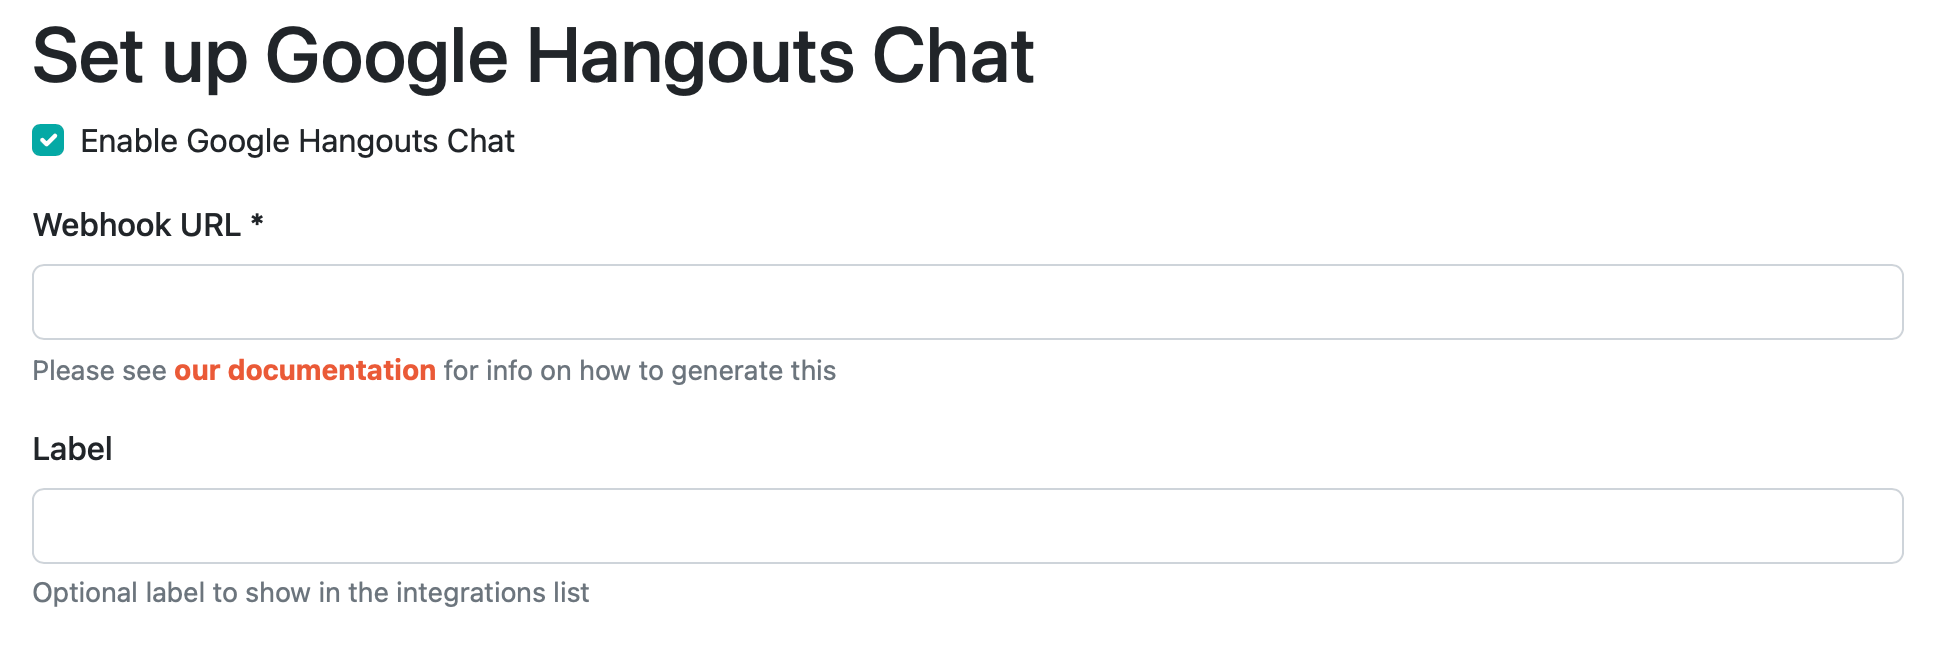 google hangouts chat form